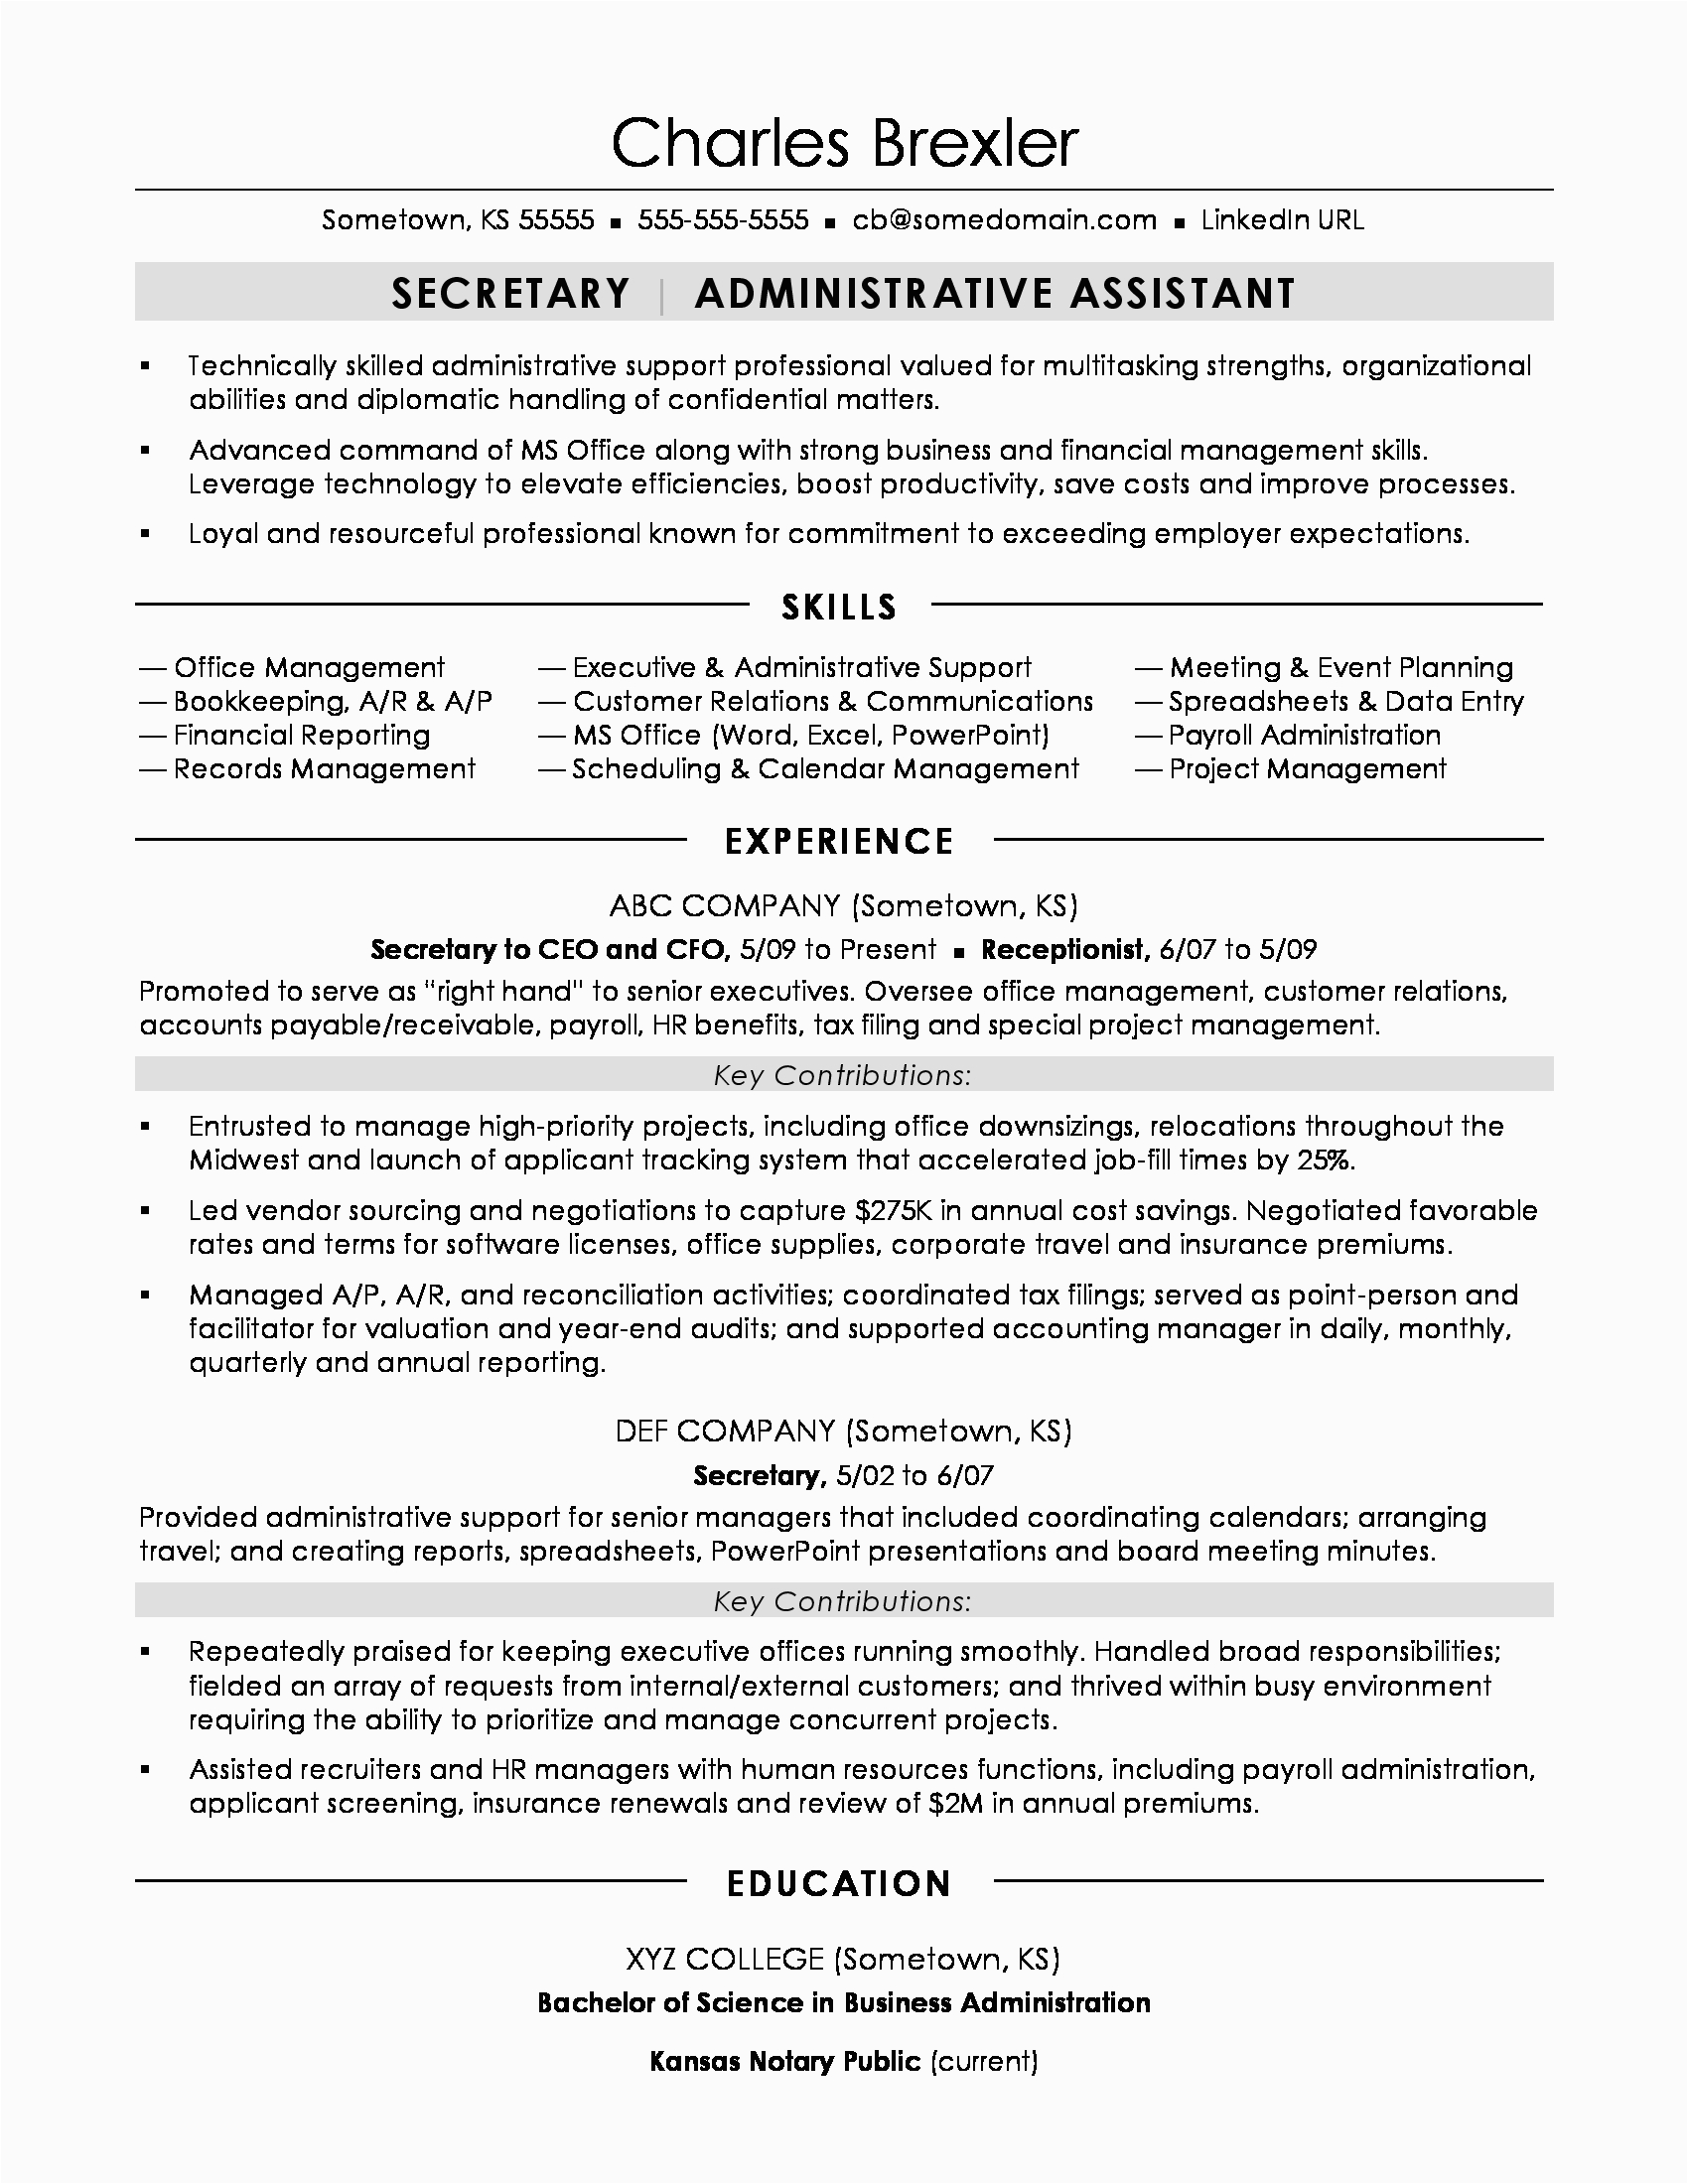 Sample Resume for Secretary with No Experience Secretary Resume Sample